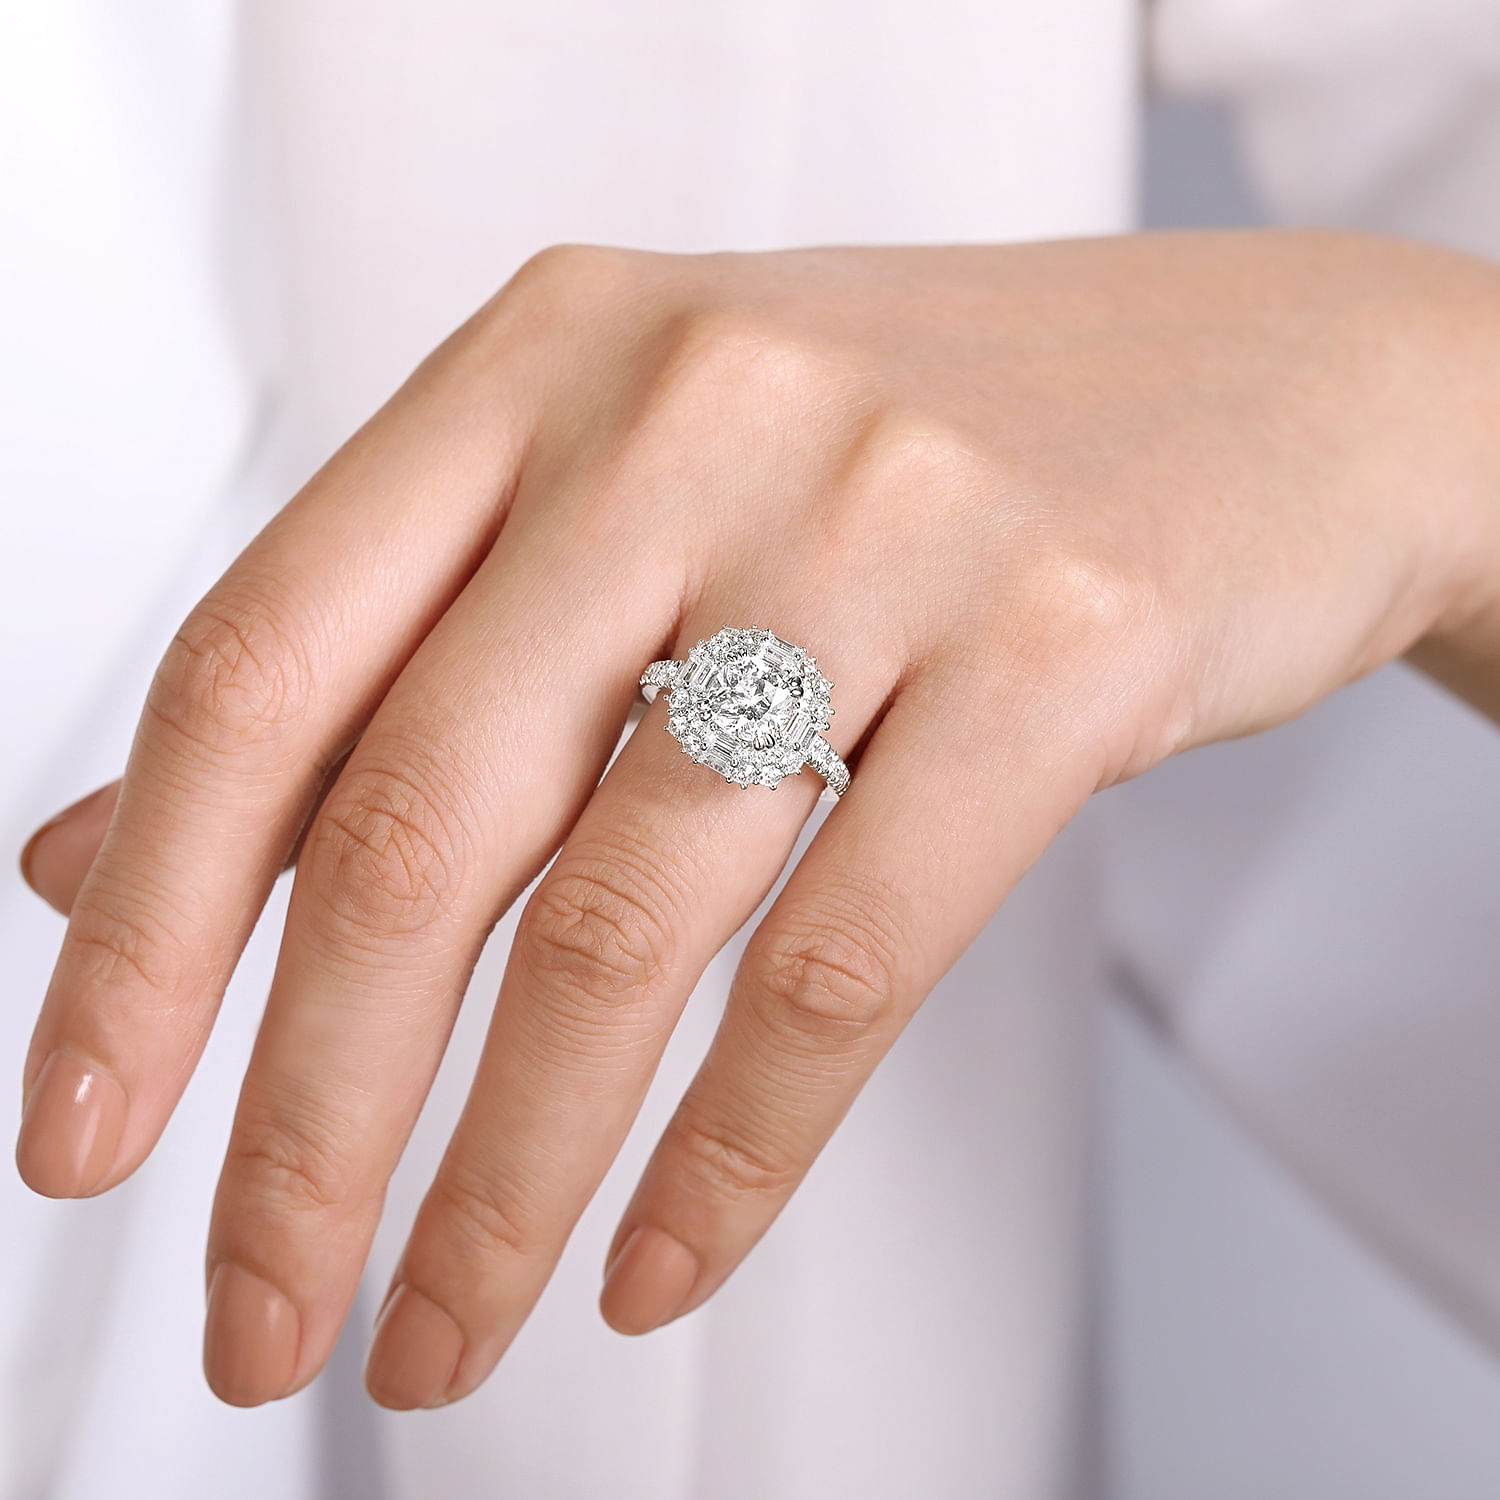 14k White Gold Cushion Cut Double Halo Diamond Engagement Ring